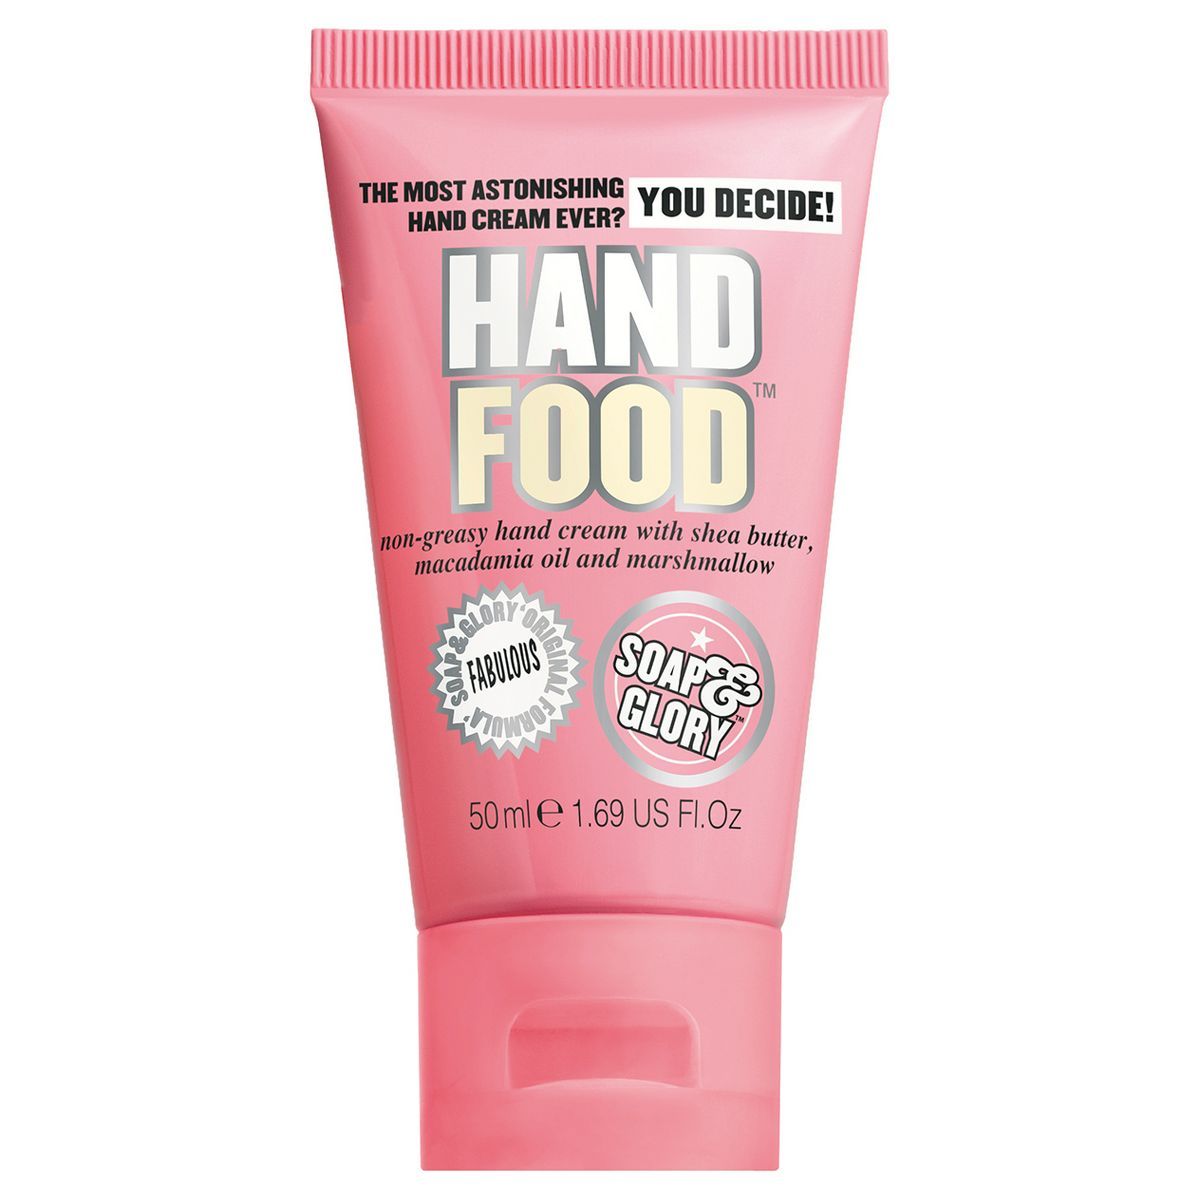 Soap & Glory Hand Food Hydrating Hand Cream - Original Pink Scent - Travel Size - 1.69 fl oz | Target